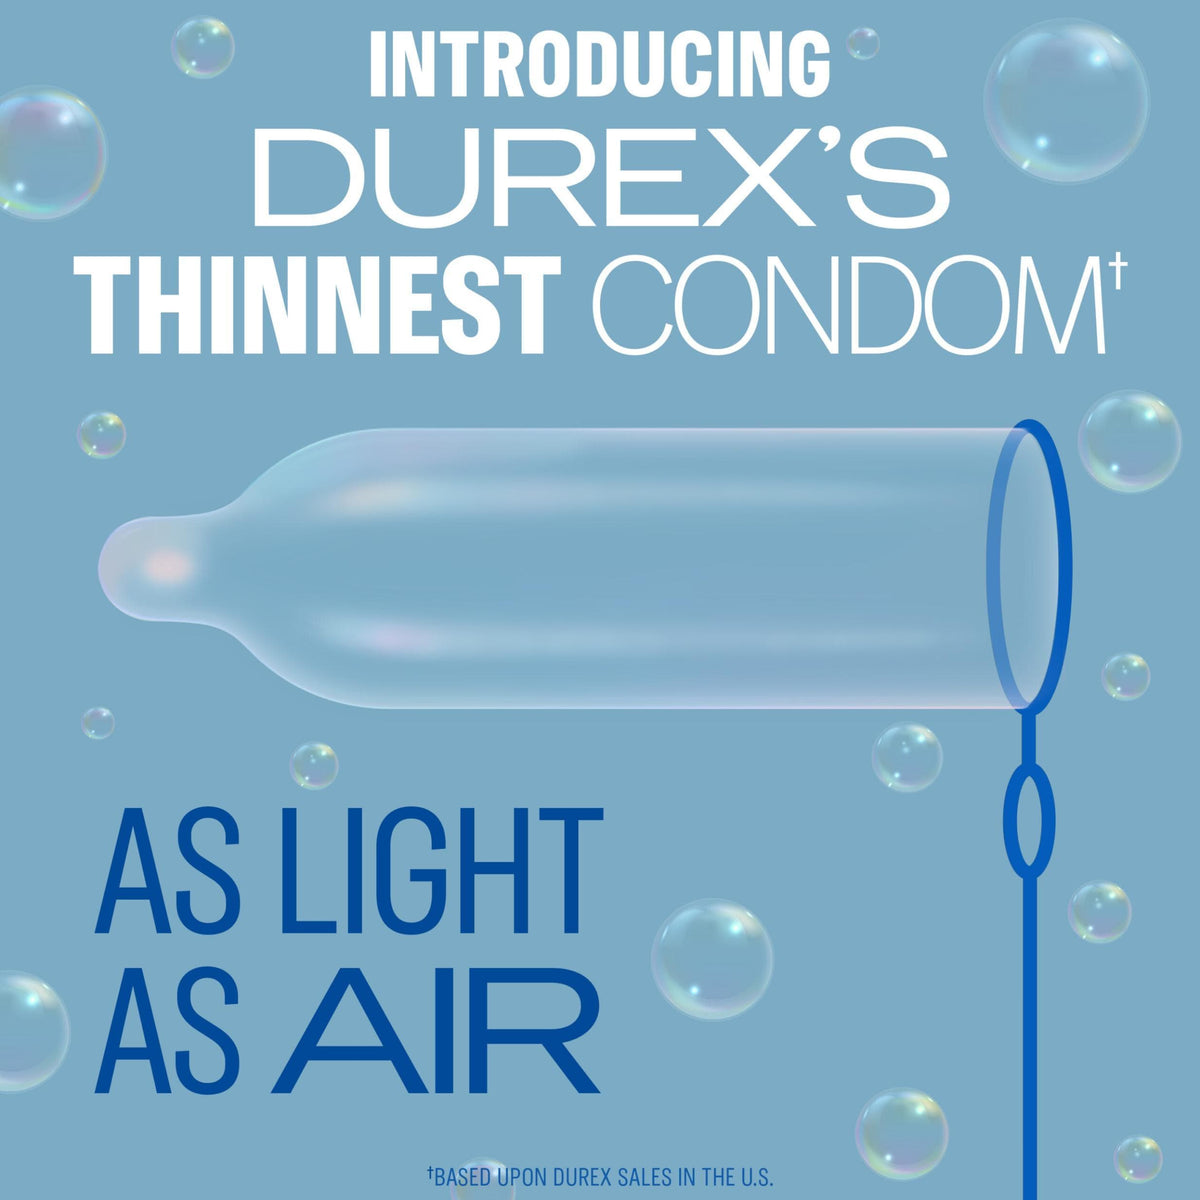 condom effectiveness, condom brands